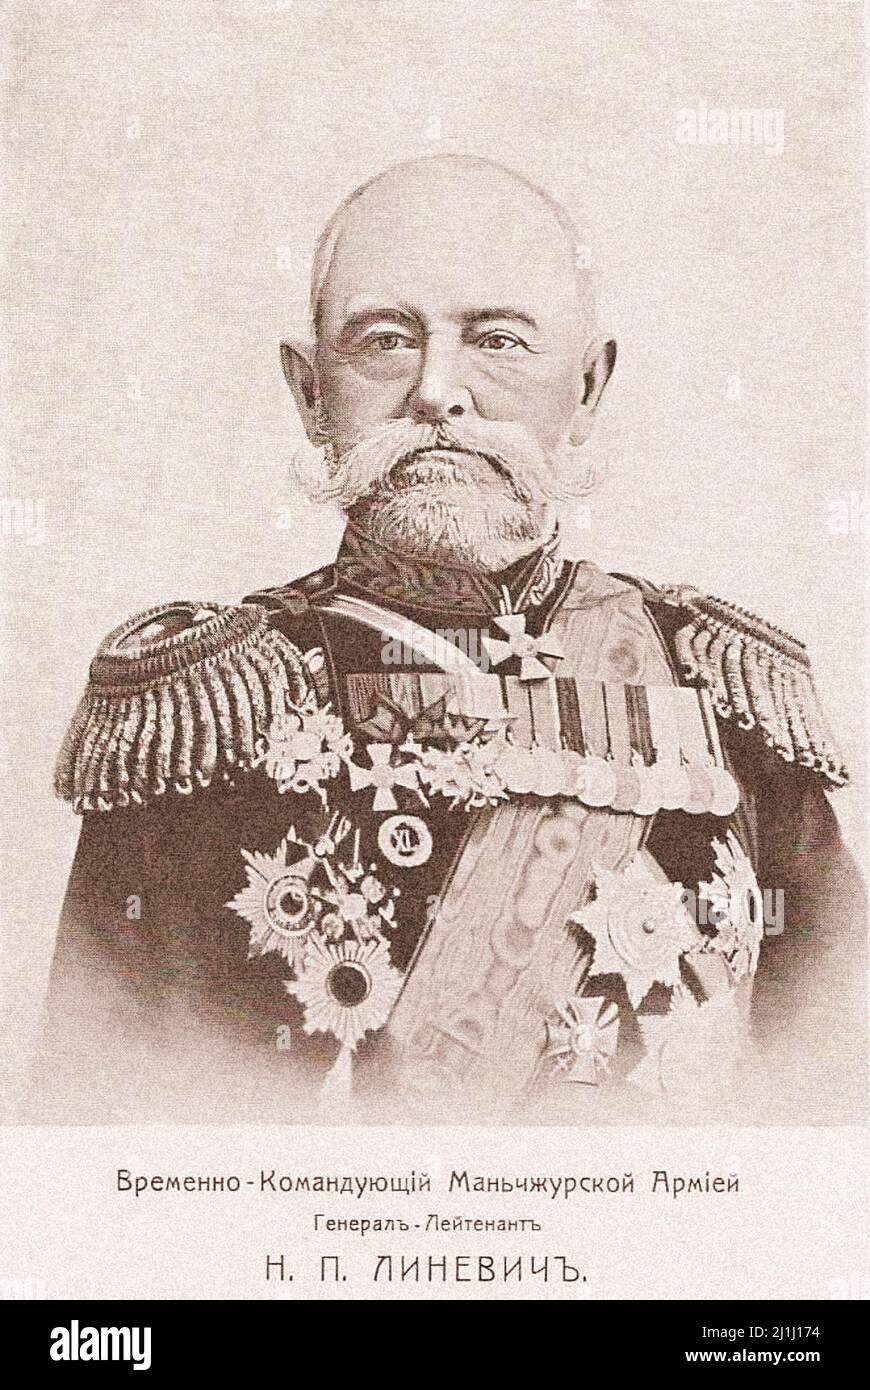 Nikolai Petrovici Ohotnikov |